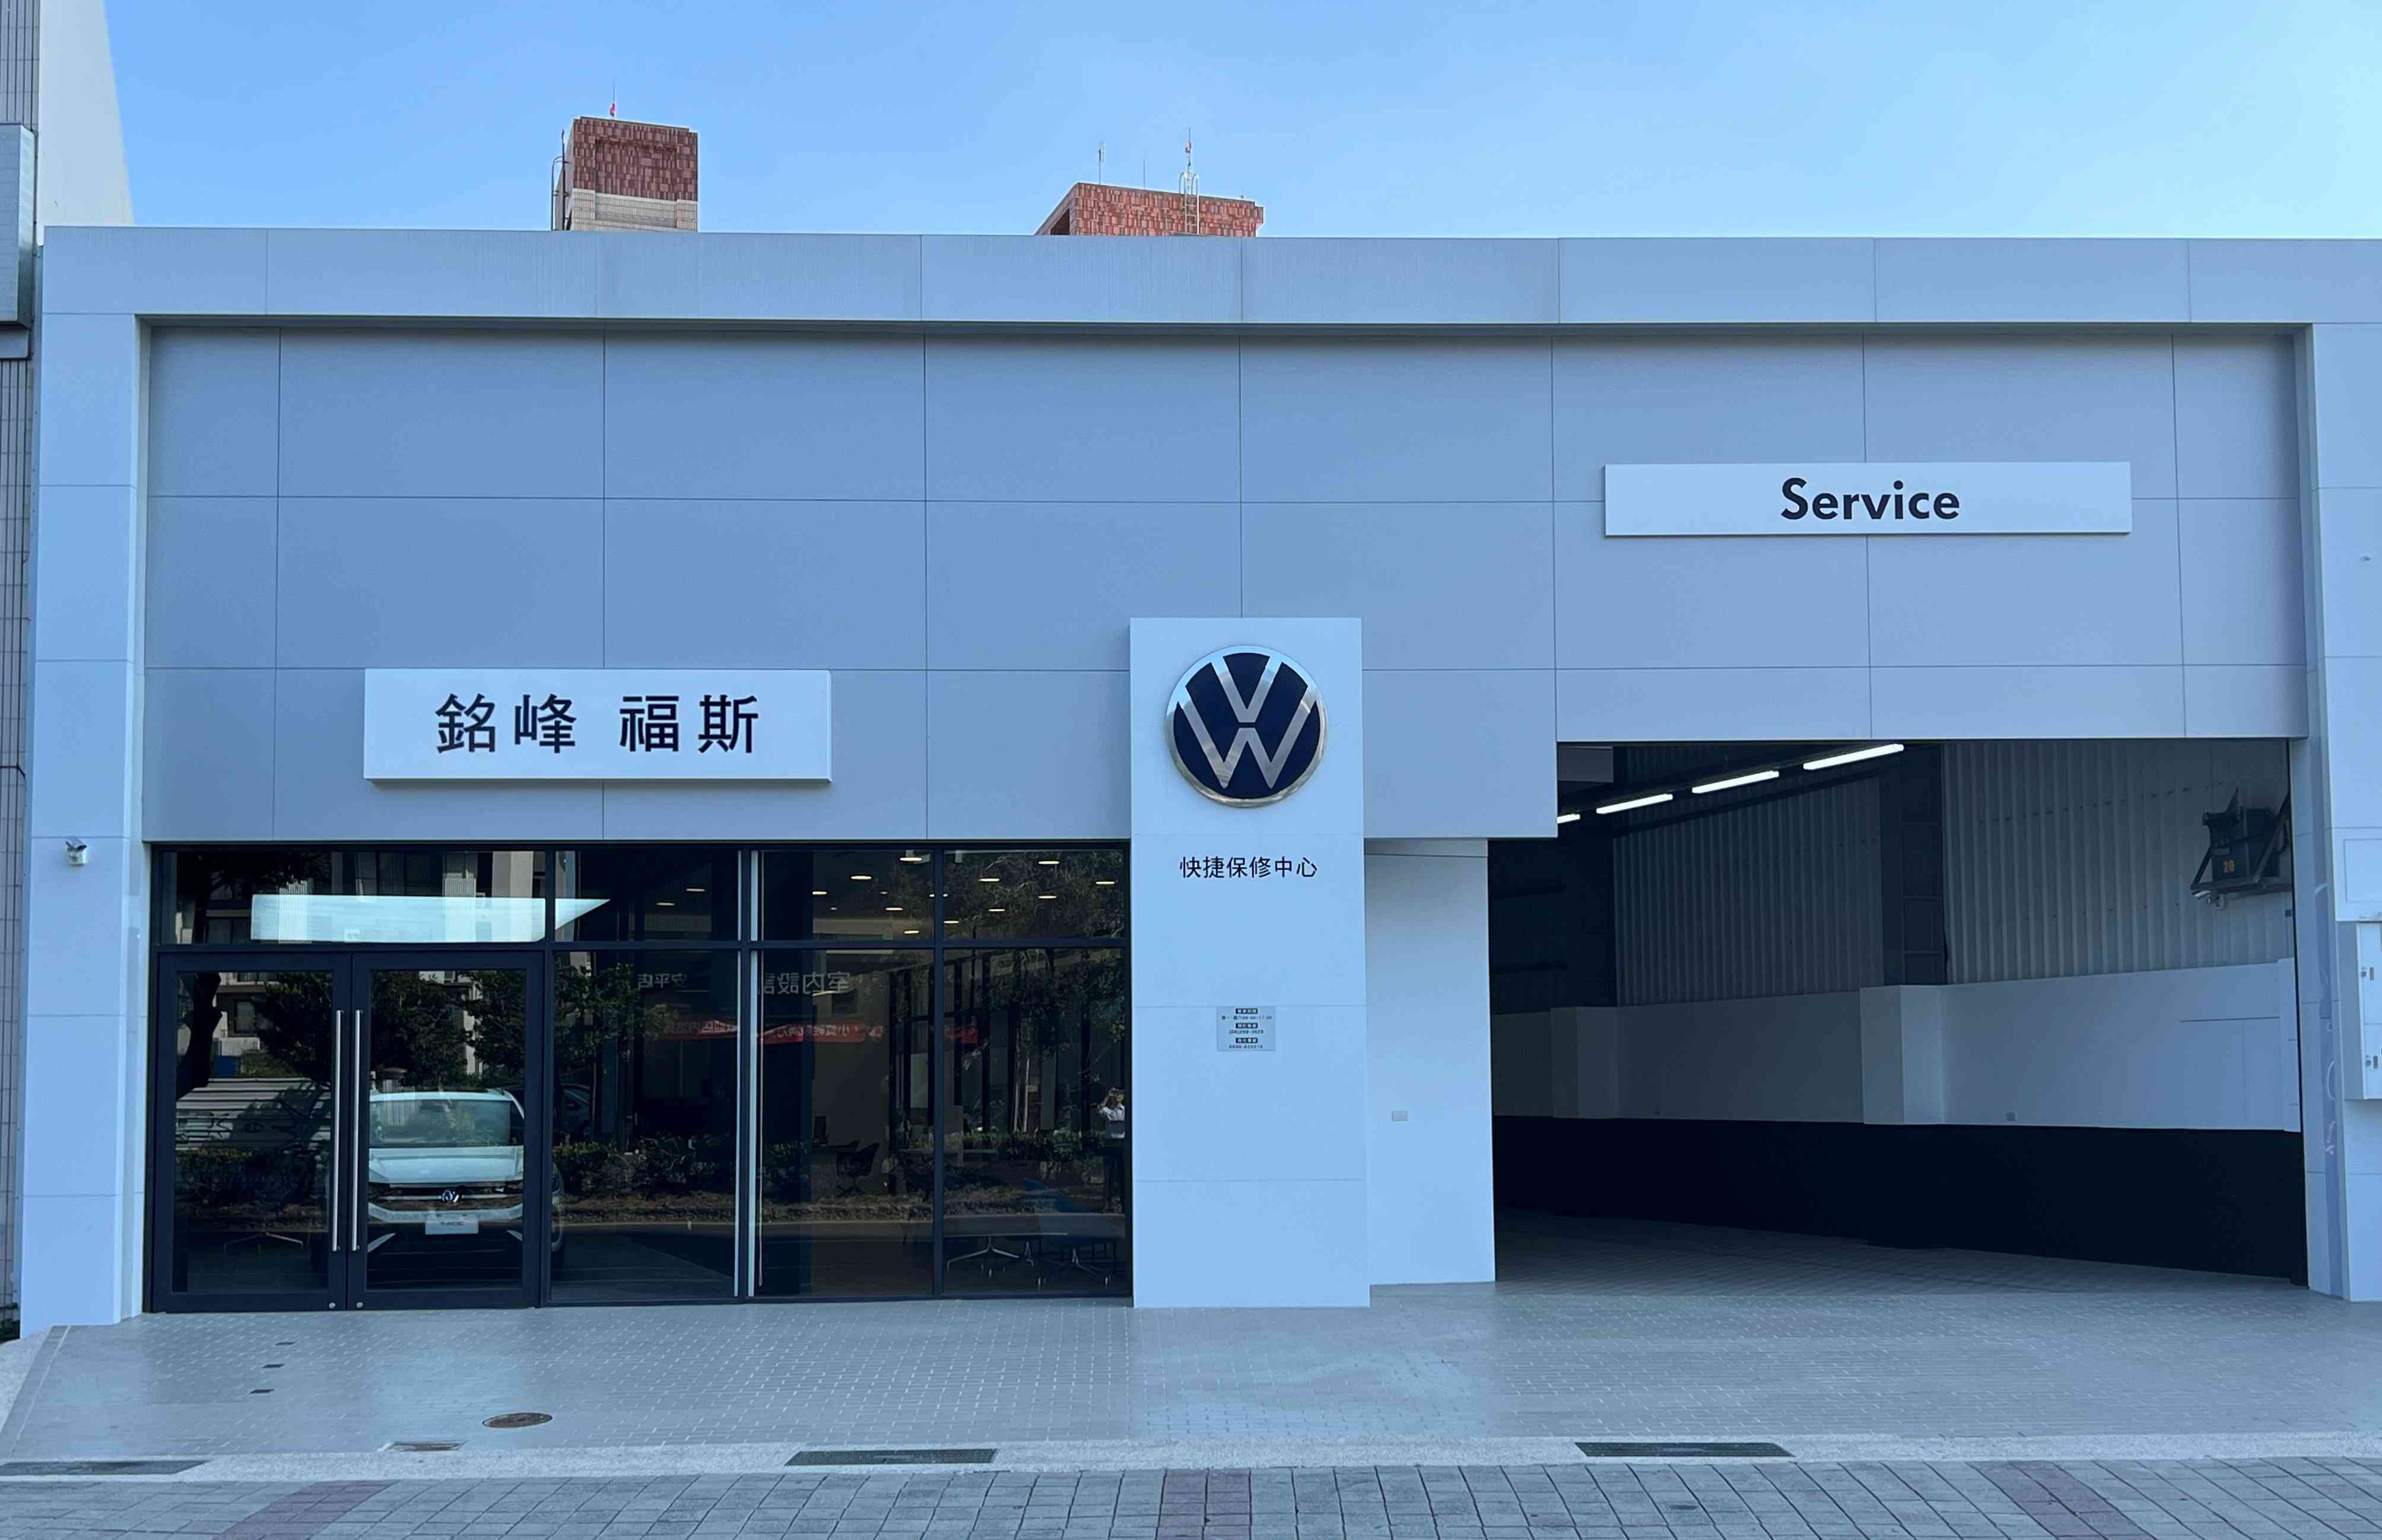 Volkswagen 台南中華西銘峰快捷保修中心全新登場擴大南台灣服務網絡 提供日漸增長的車主更加完善的服務